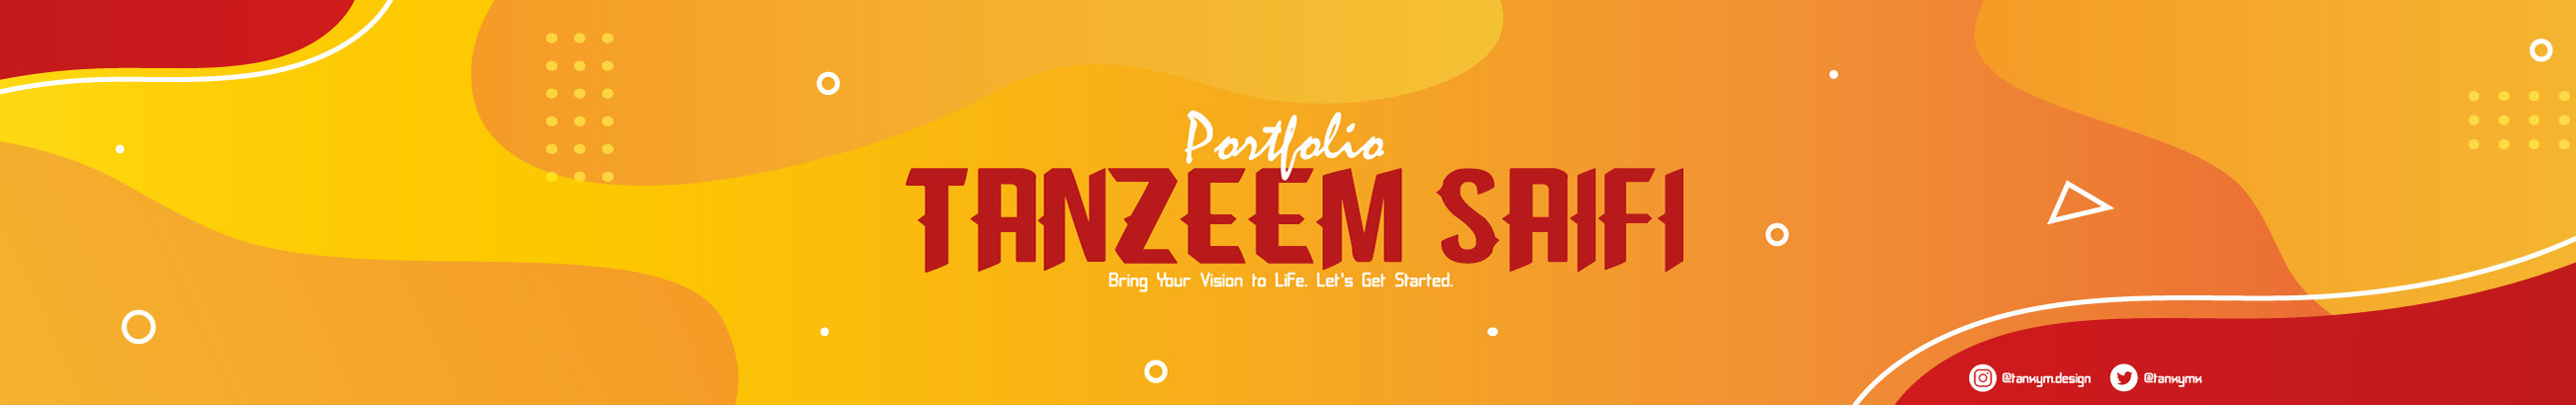 Tanzeem Saifi's profile banner